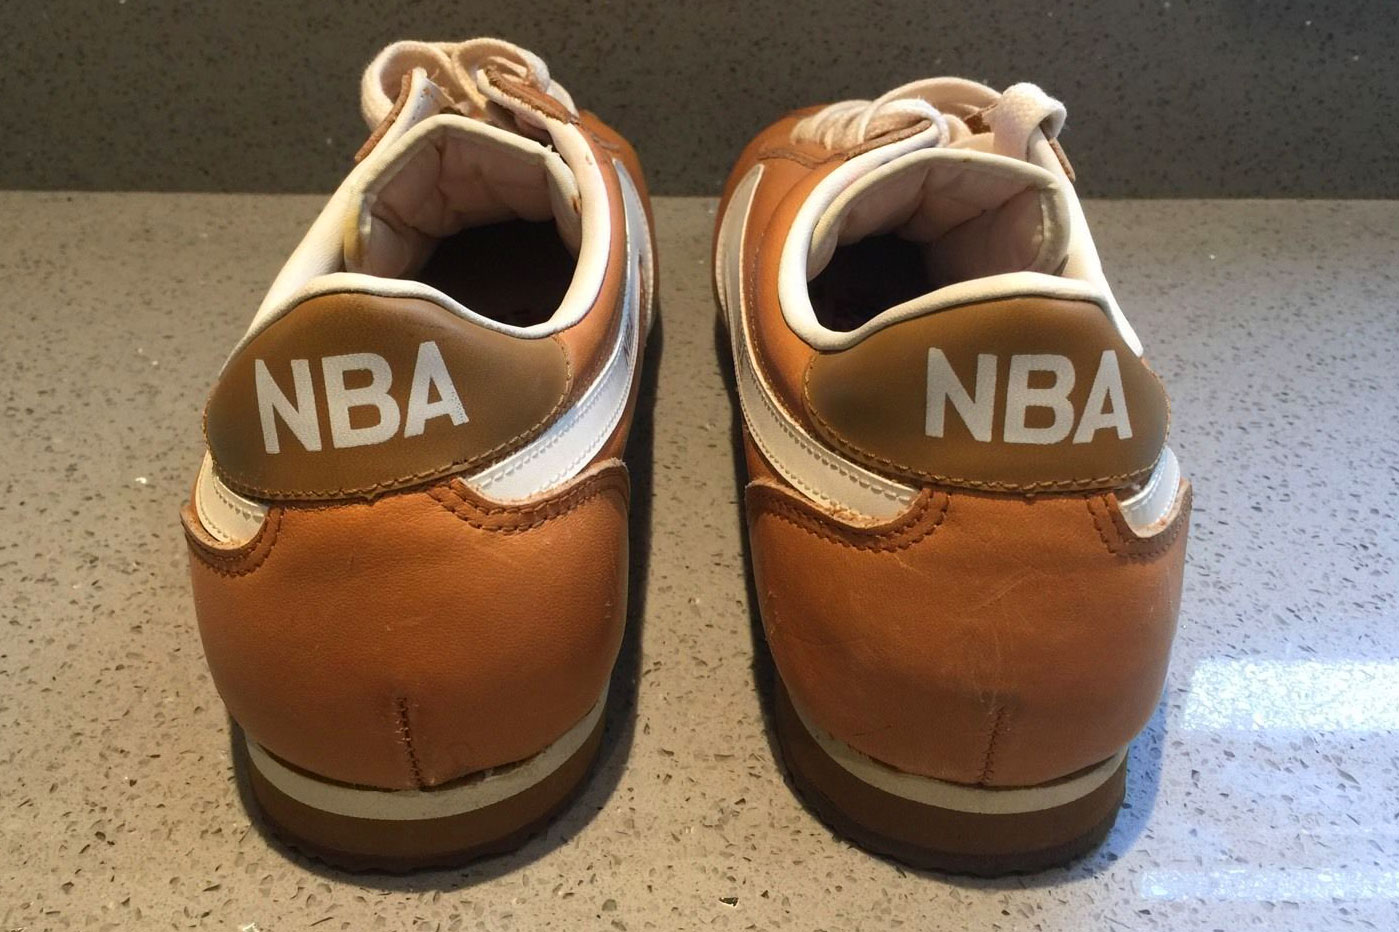 Kinney NBA 1970s vintage sneakers rear view @ The Deffest